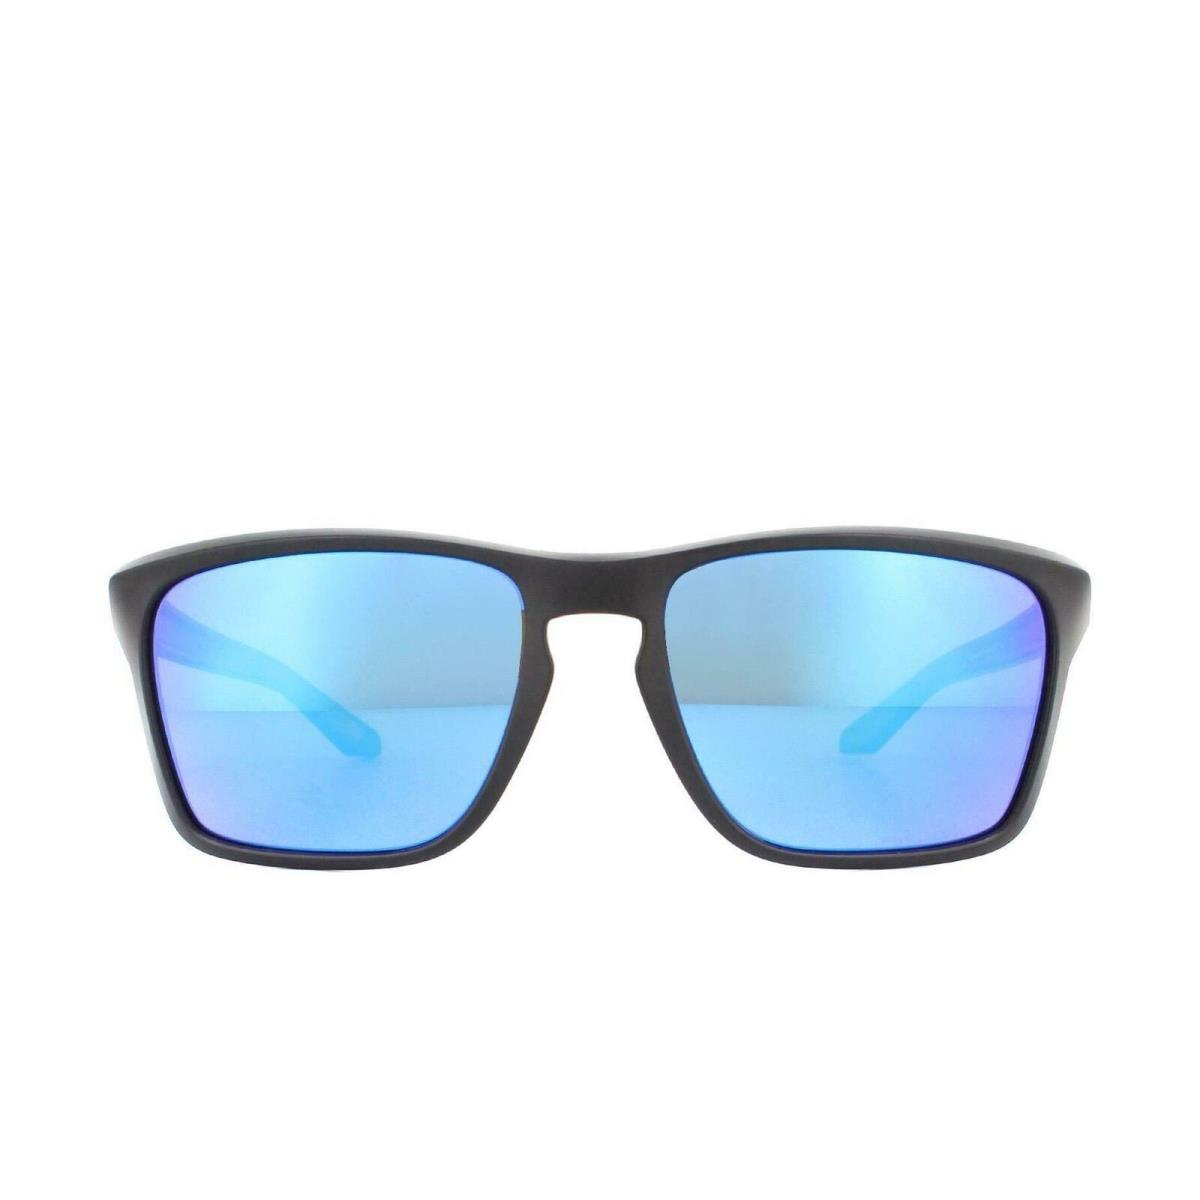 OO9448-12 Mens Oakley Sylas Polarized Sunglasses - Frame: Black, Lens: Blue